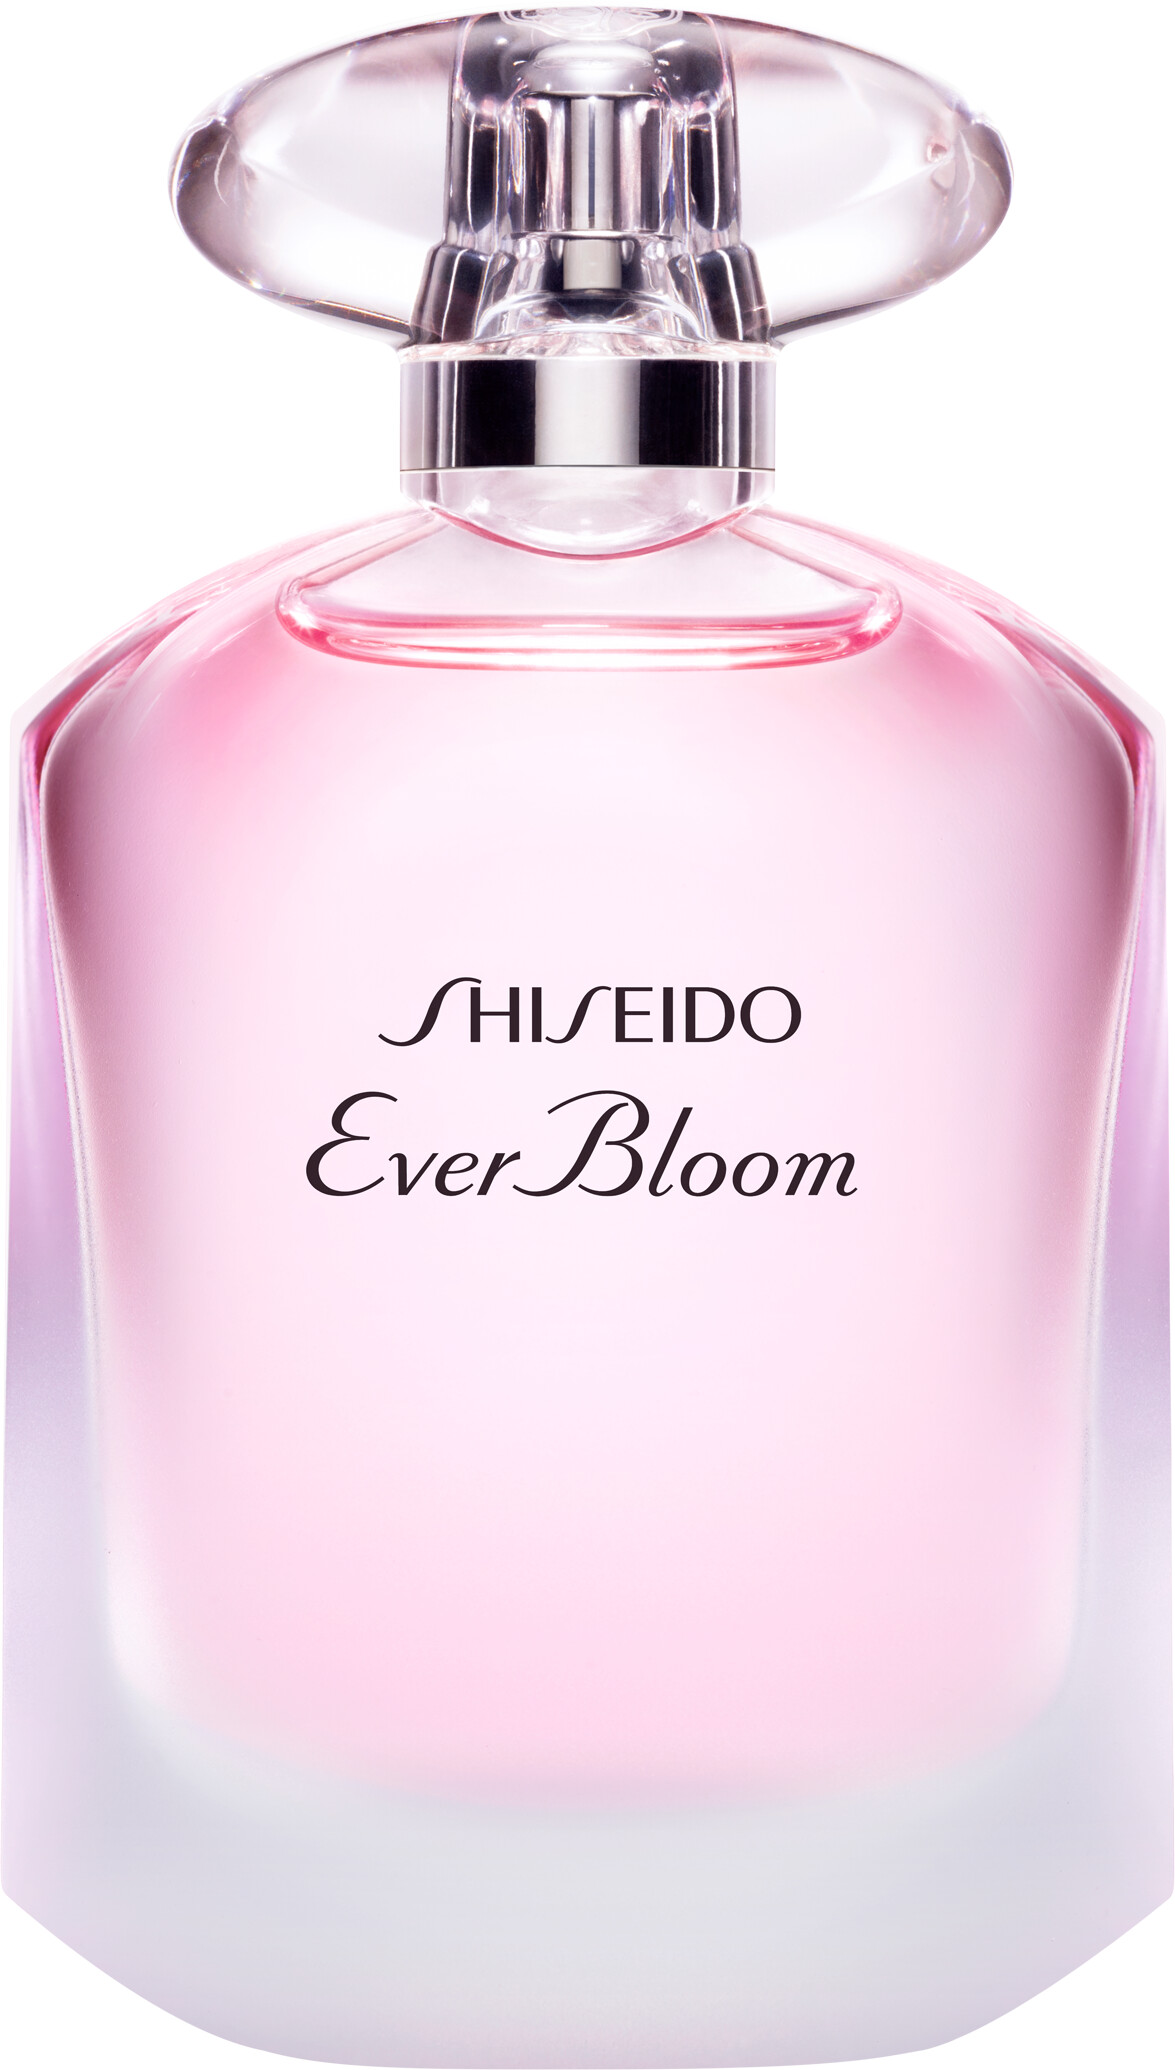 Shiseido Ever Bloom Eau de Toilette Spray 50ml